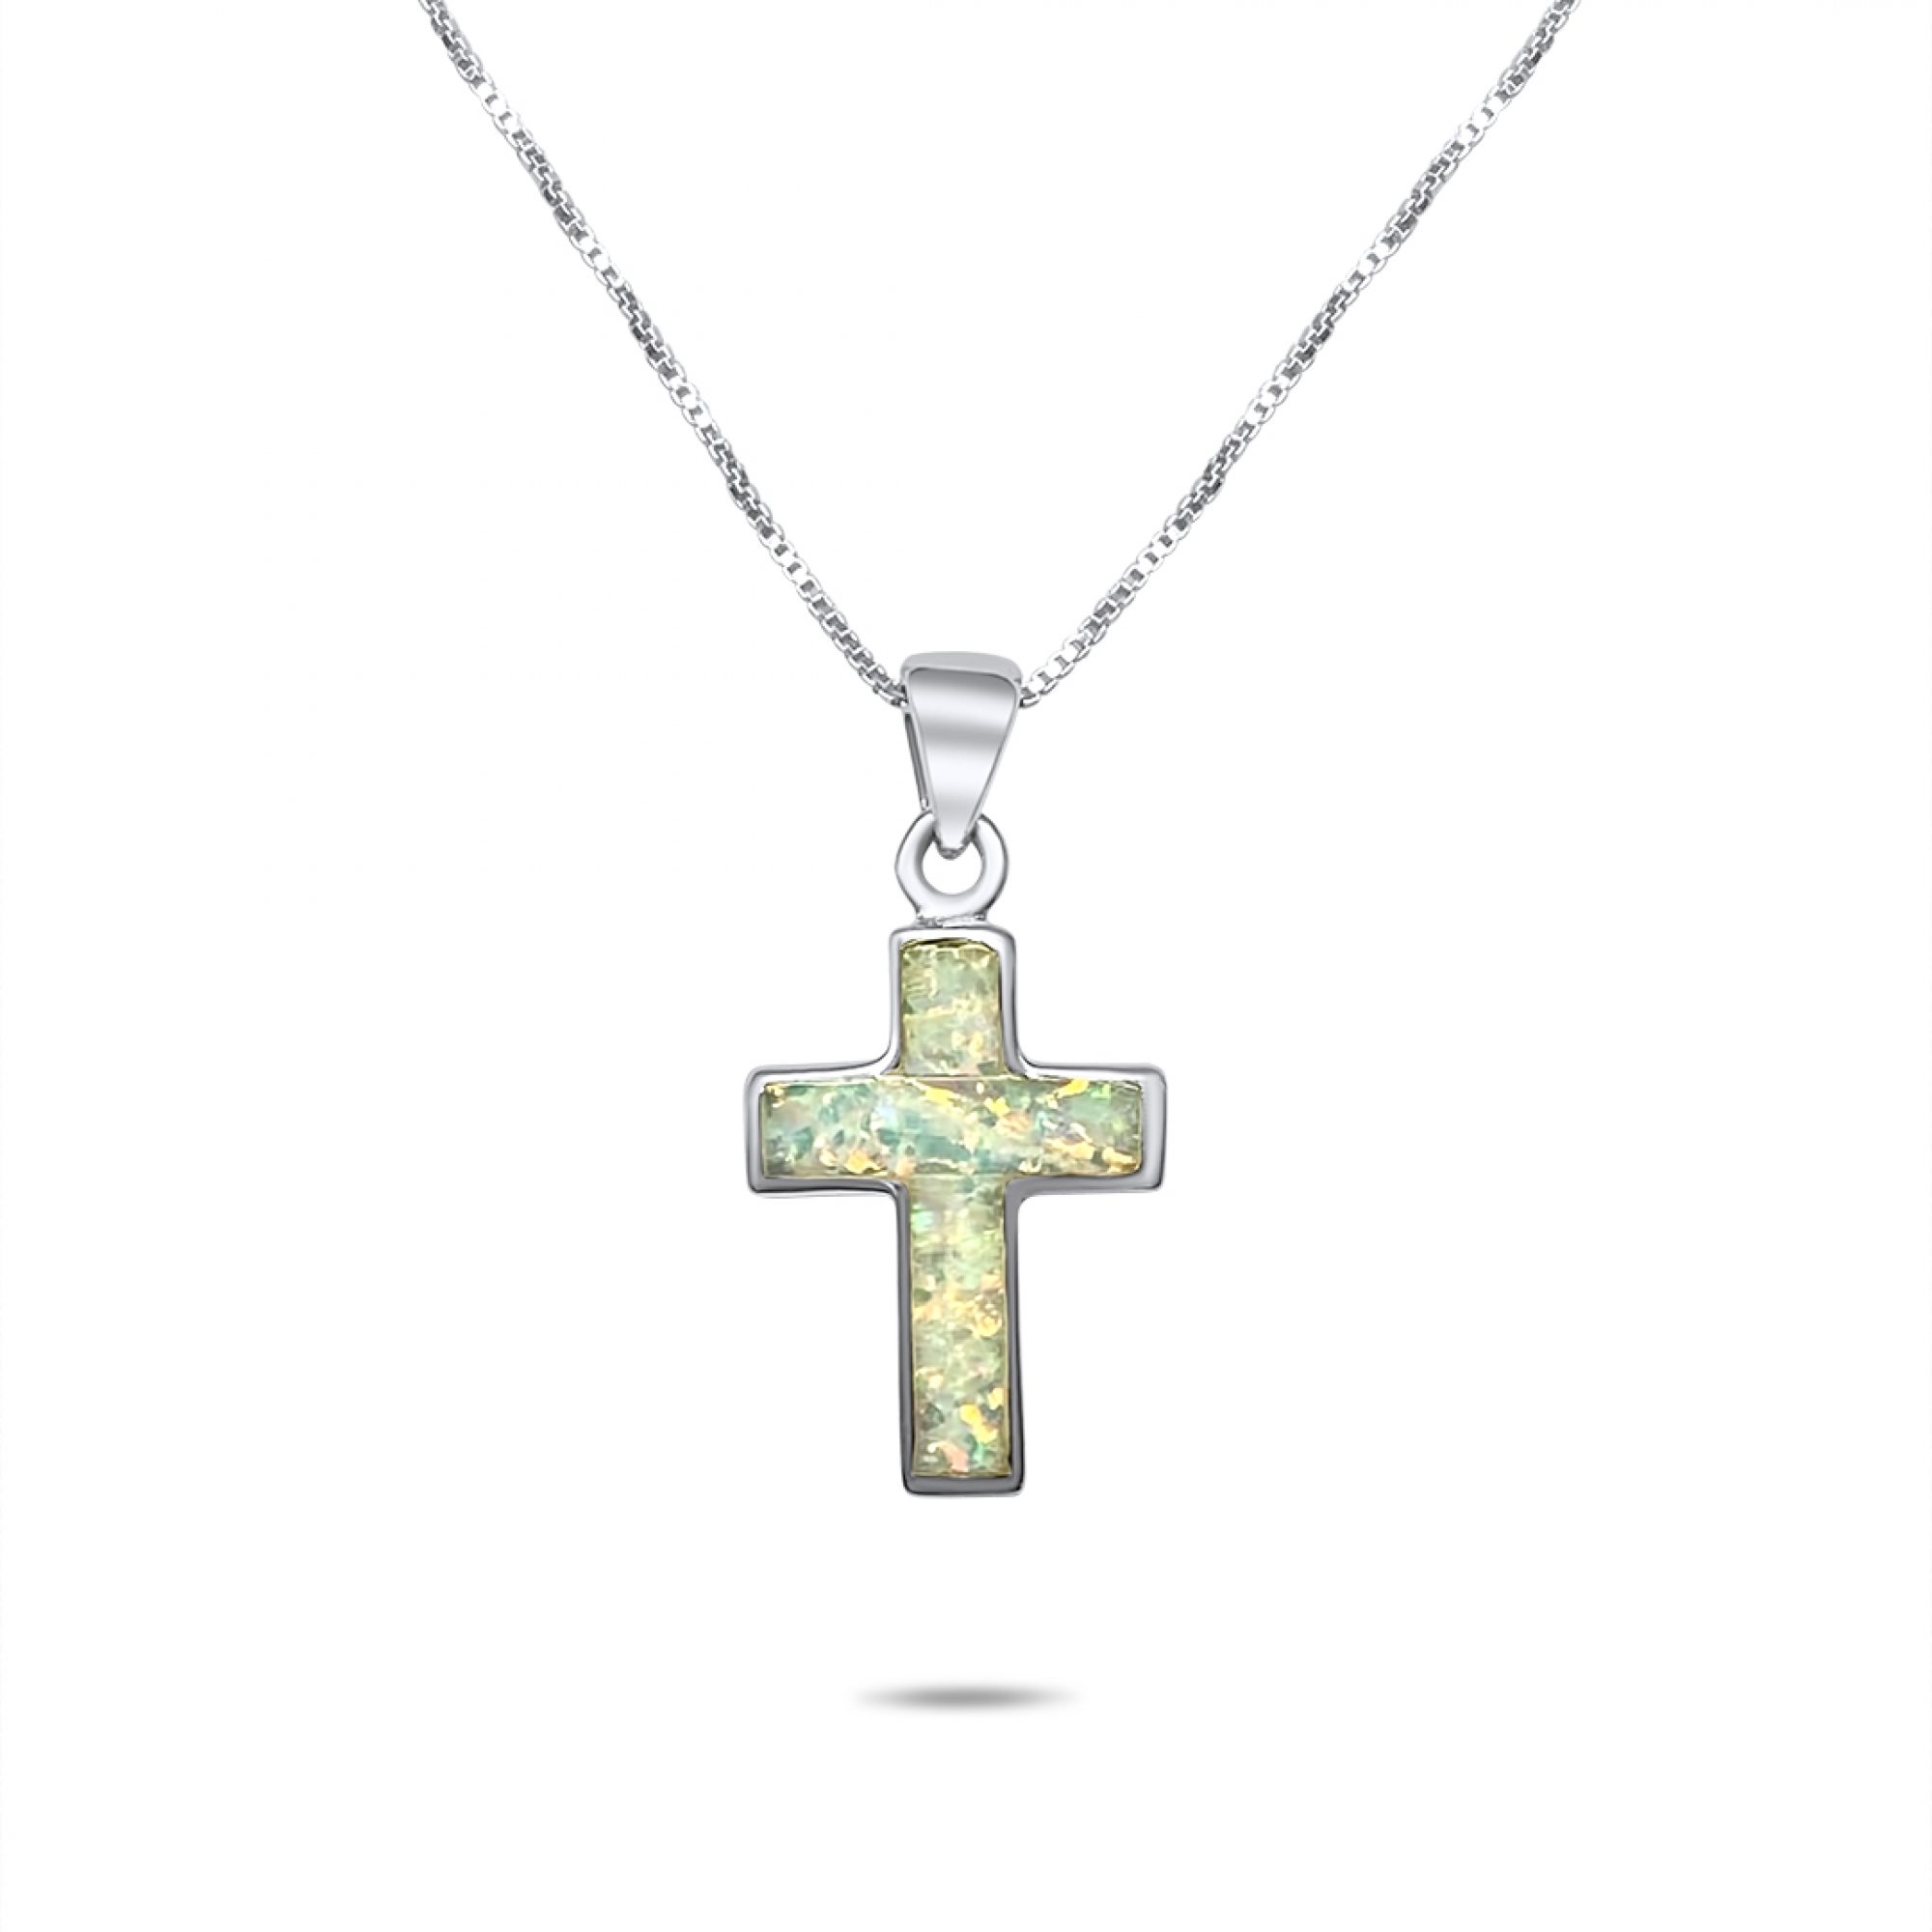 White opal cross pendant